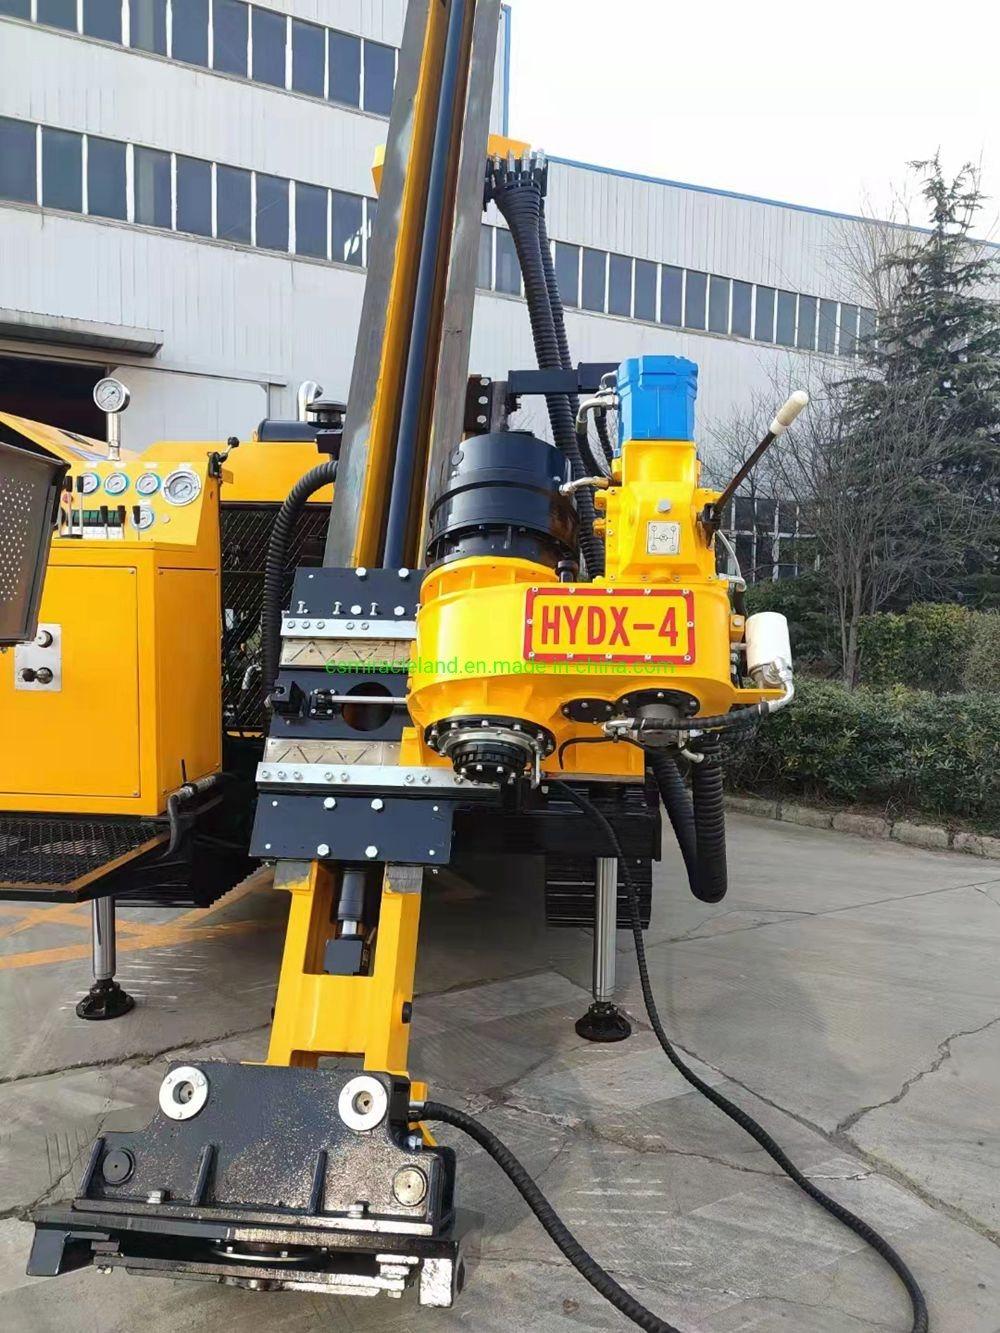 Hydx-4 Crawler Mounted Full Hydraulic Top Drive Mine Investigation Core Drilling Machine